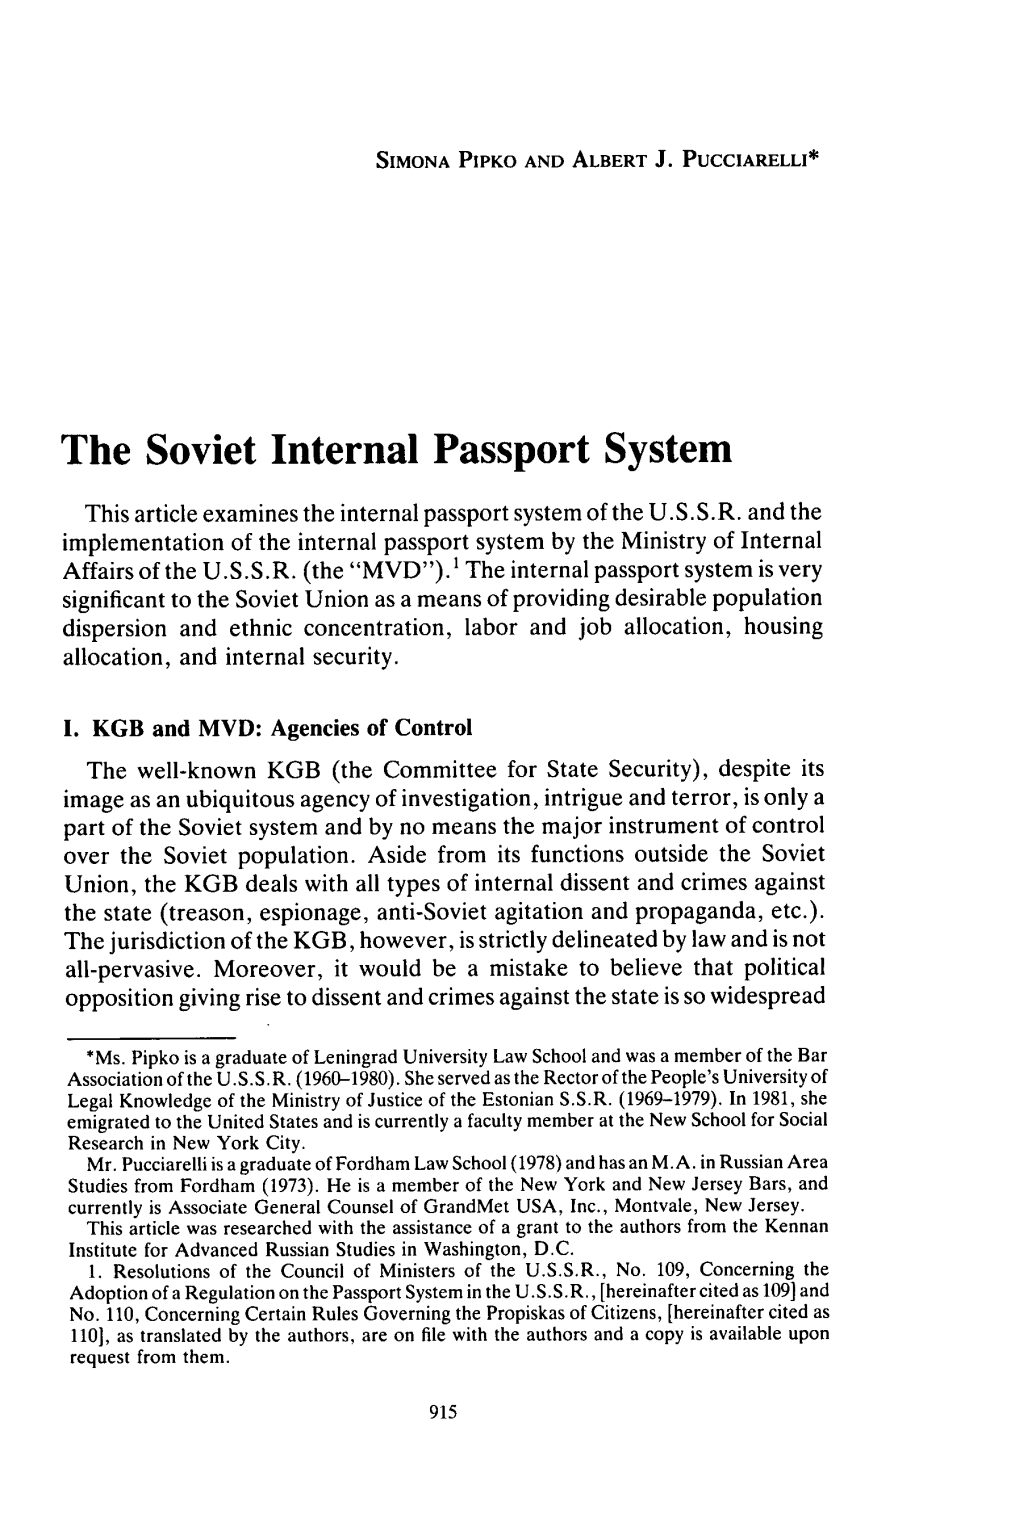 The Soviet Internal Passport System